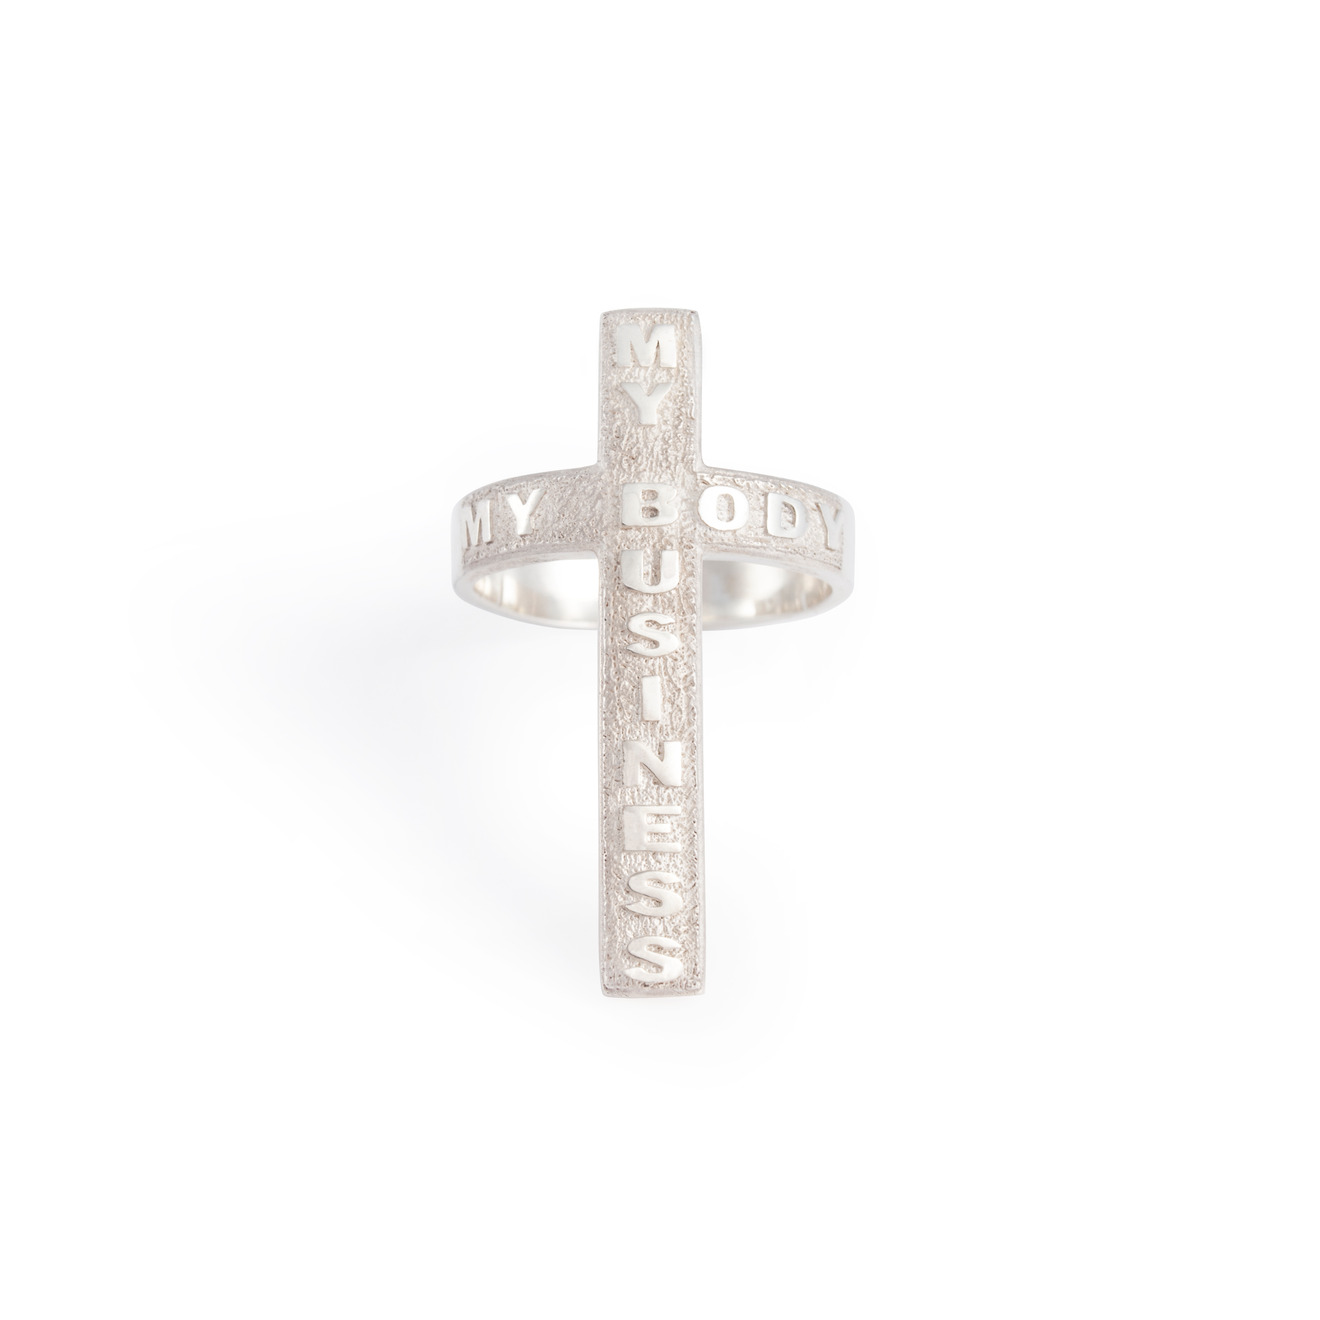 AMARIN Jewelry Кольцо-крест из серебра из коллекции My Body My Business